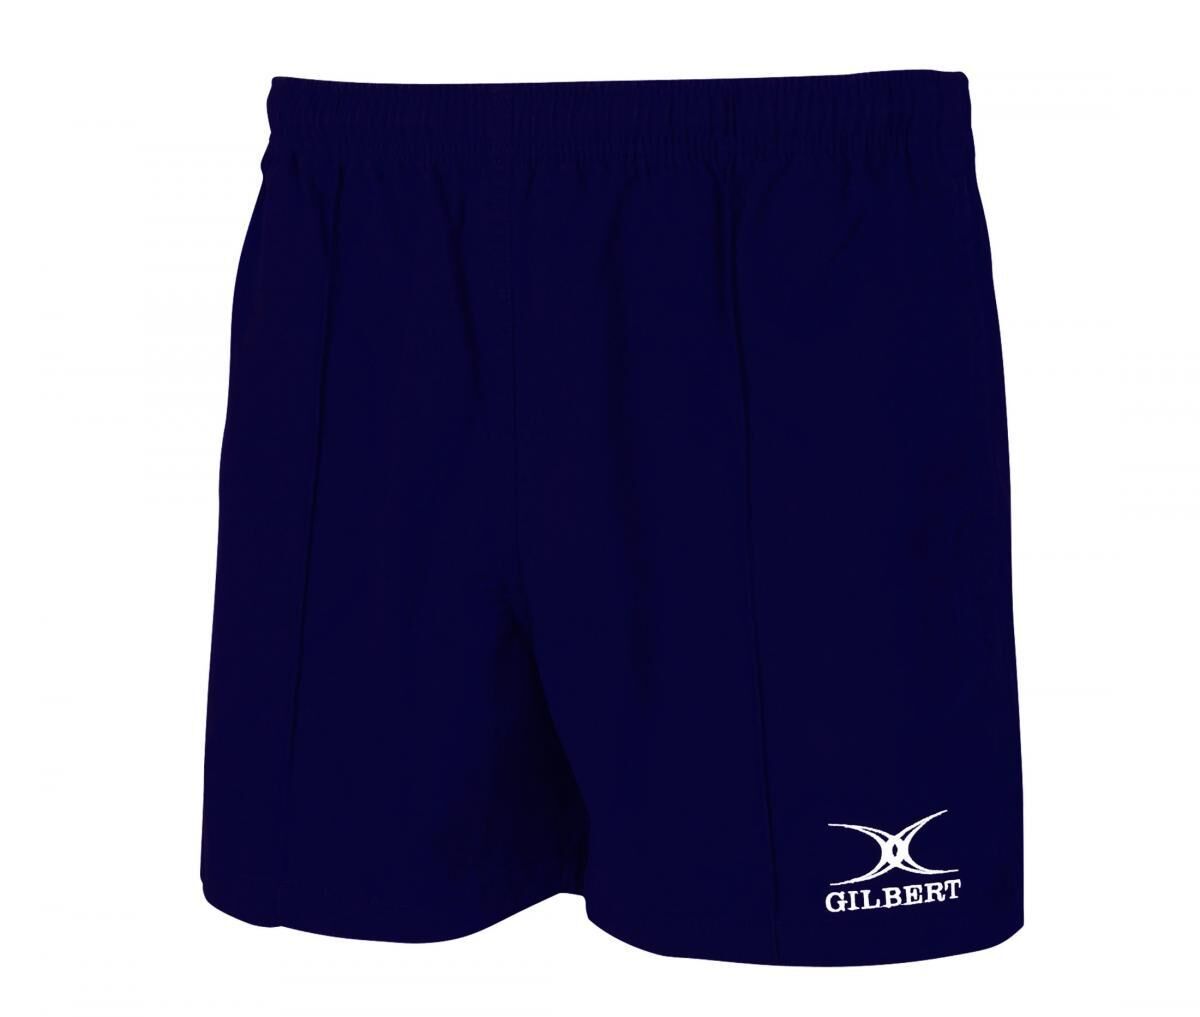 GILBERT Kiwi Pro Shorts, Dark Navy